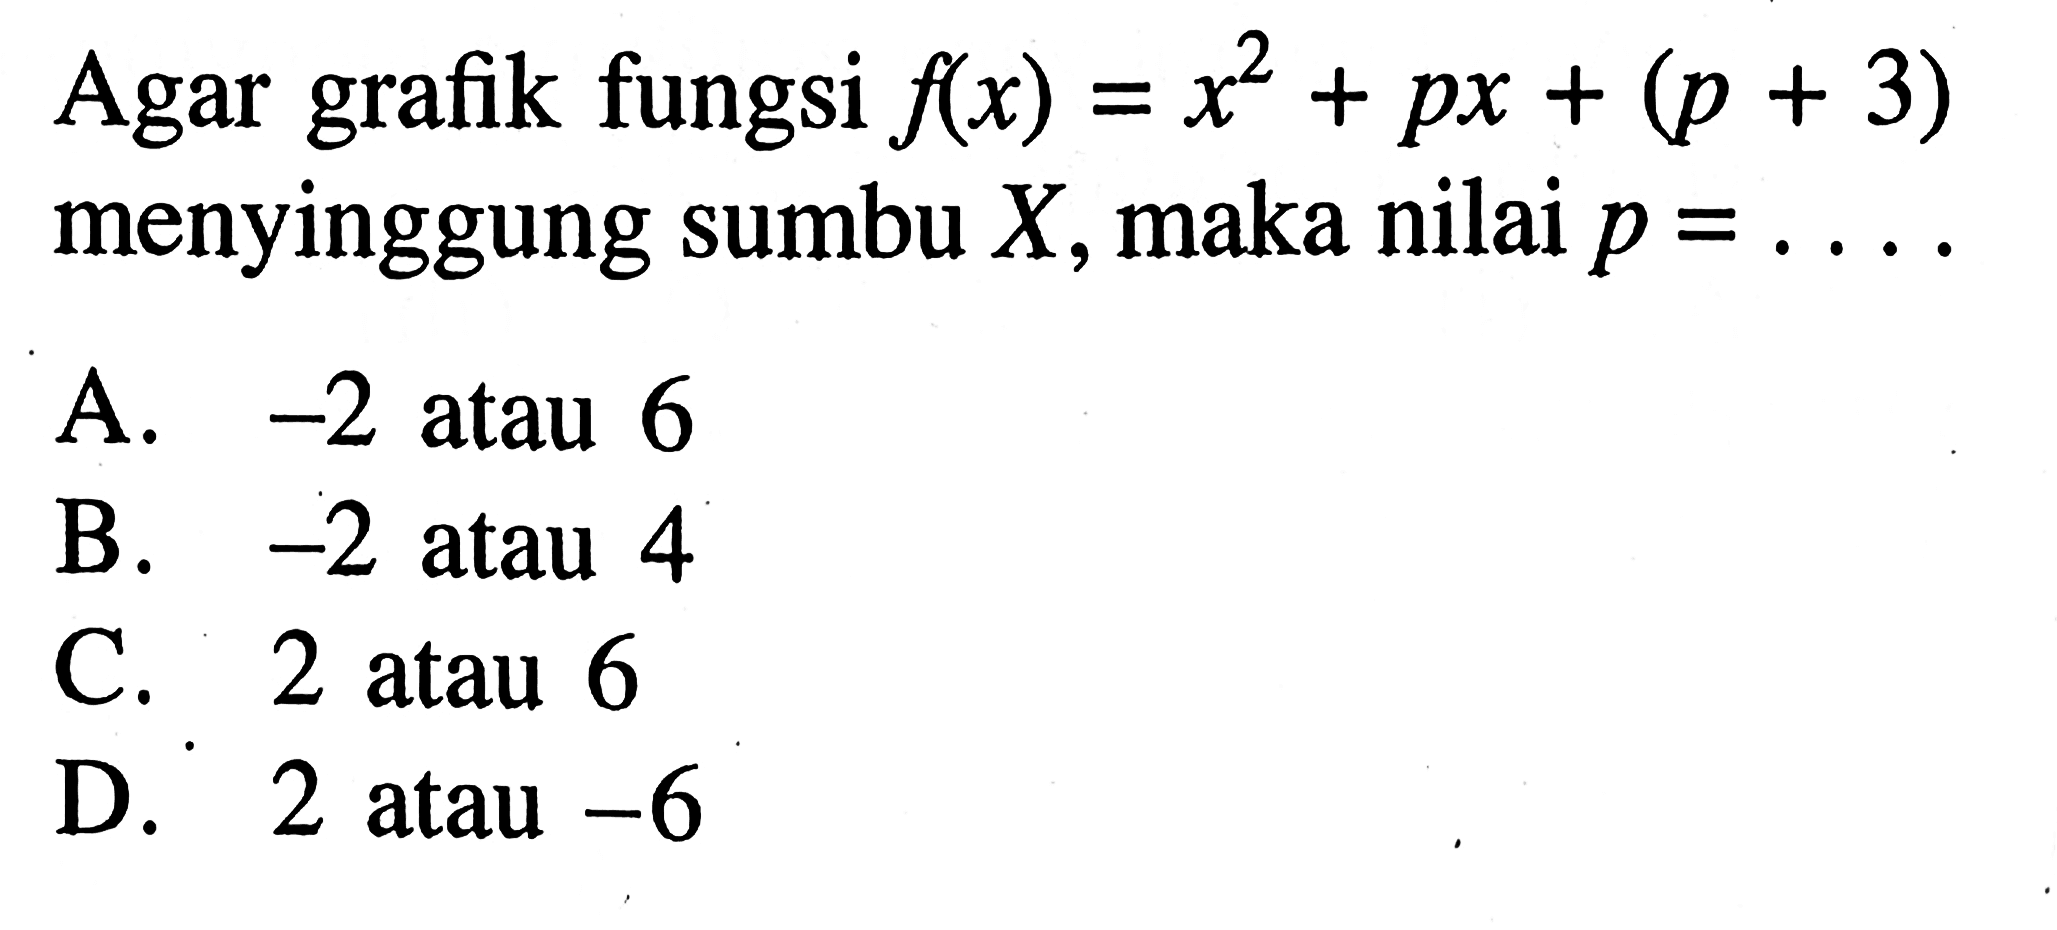 Agar grafik fungsi f(x) = x^2 + px + (p + 3) menyinggung sumbu X, maka nilai p = . . . .